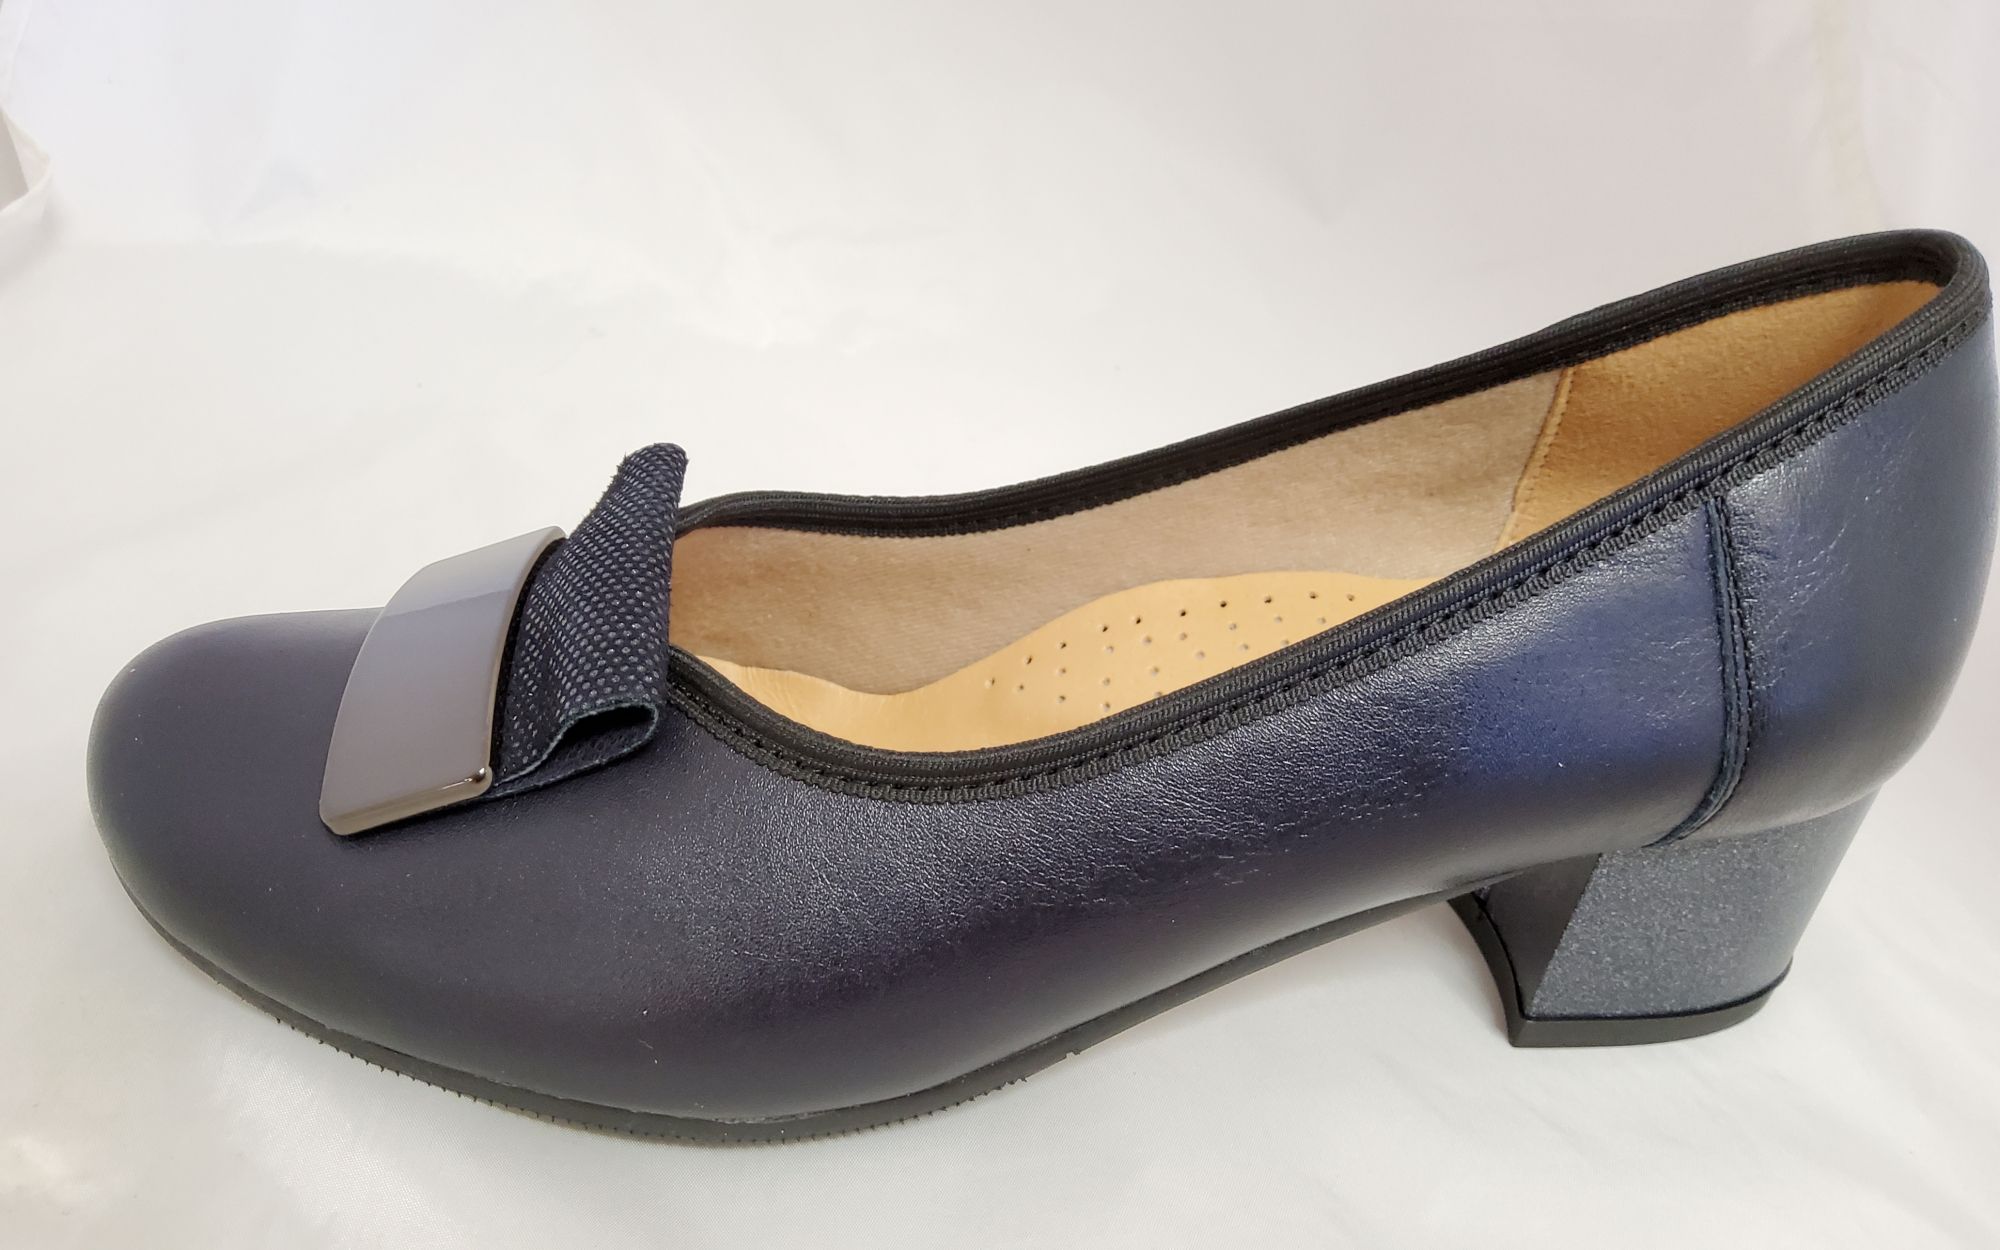 női elegáns bőr cipő 891 Granat Baflo/putino (sötétkék)